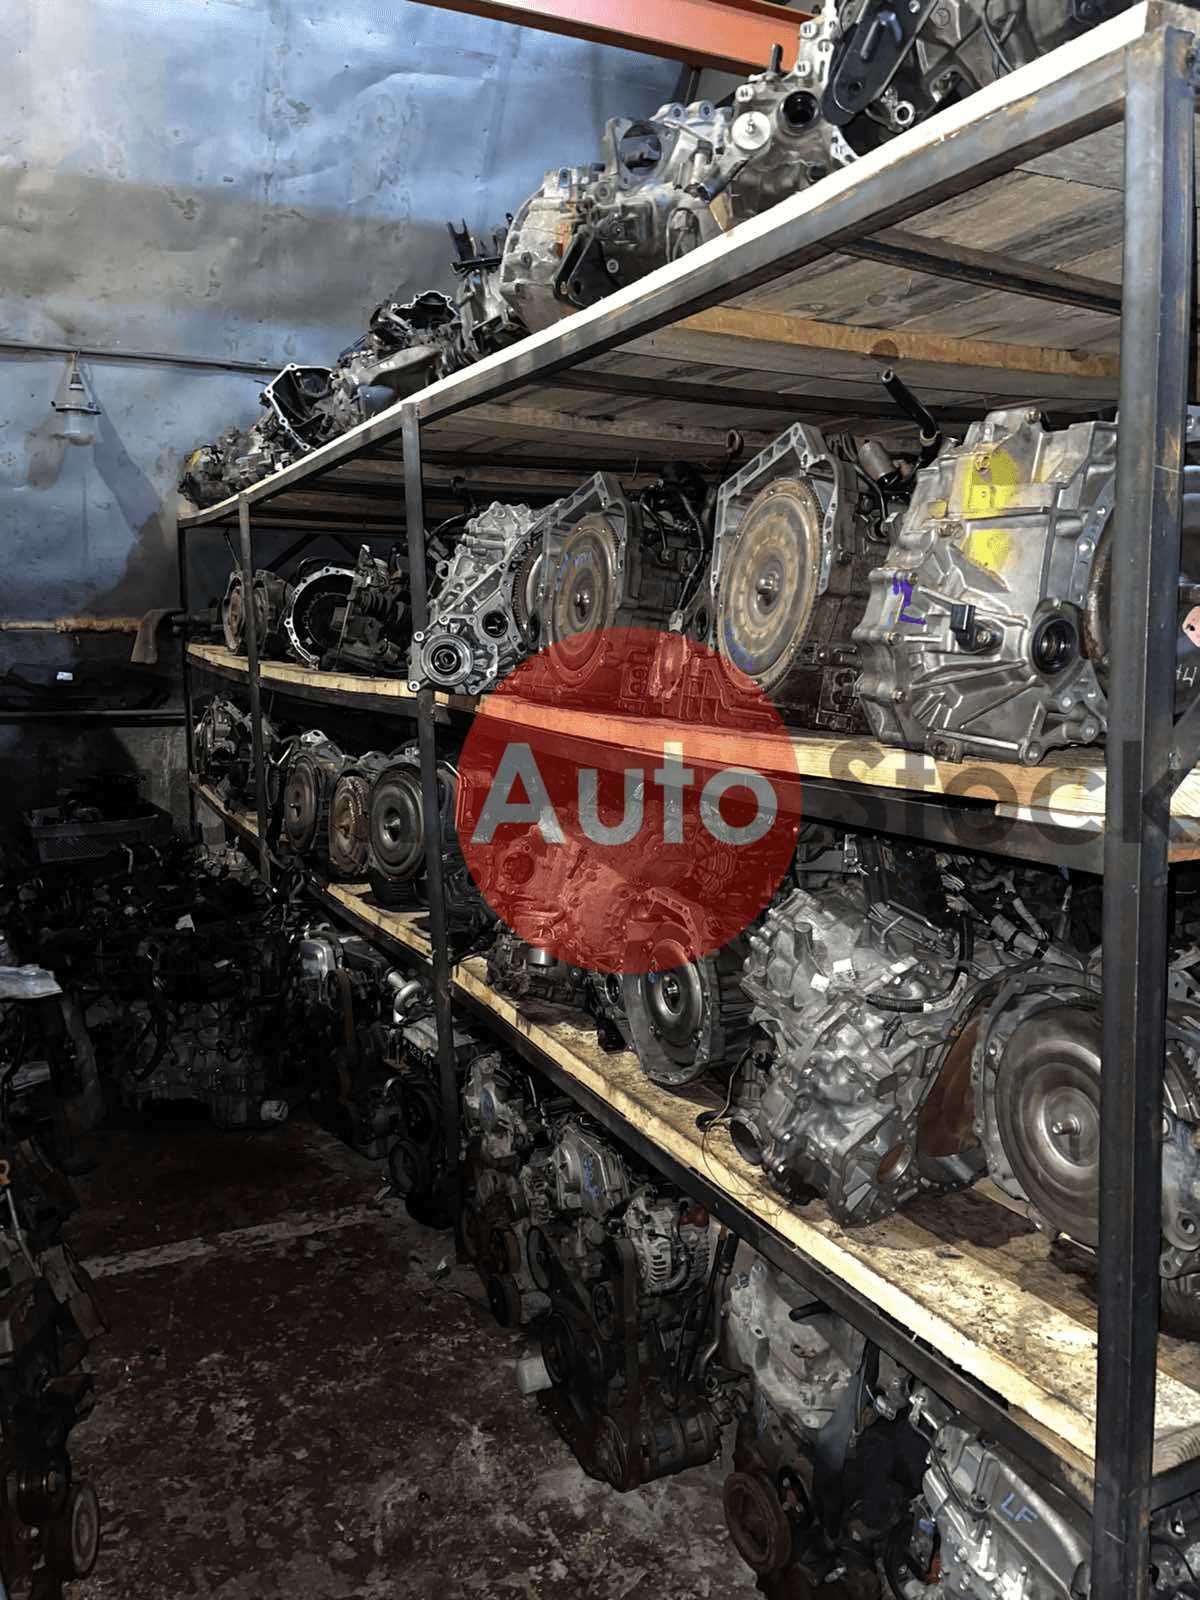 Двигатель Mitsubishi Outlander, ASX 4WD 4j12, объём 2.4, год 2013-2020